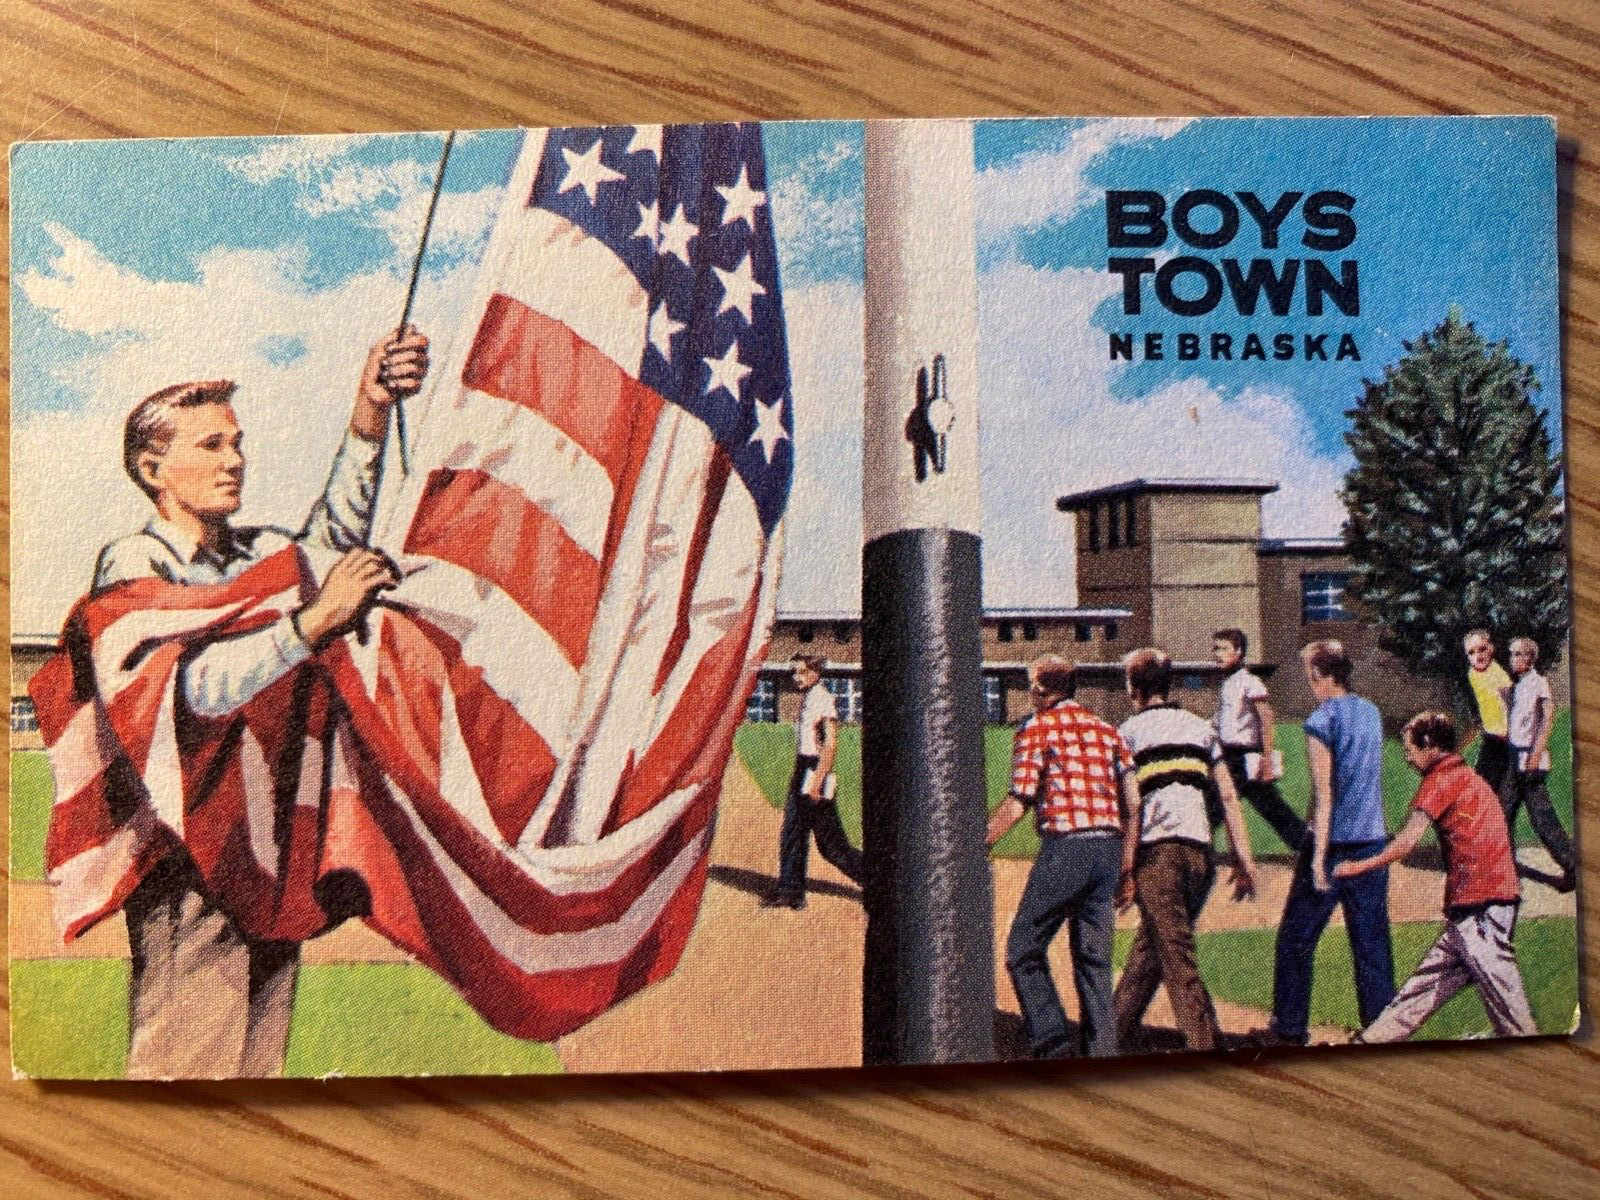 1961 BOYS TOWN, NEBRASKA vintage wallet card HONORARY CITIZEN - Father Flanagan